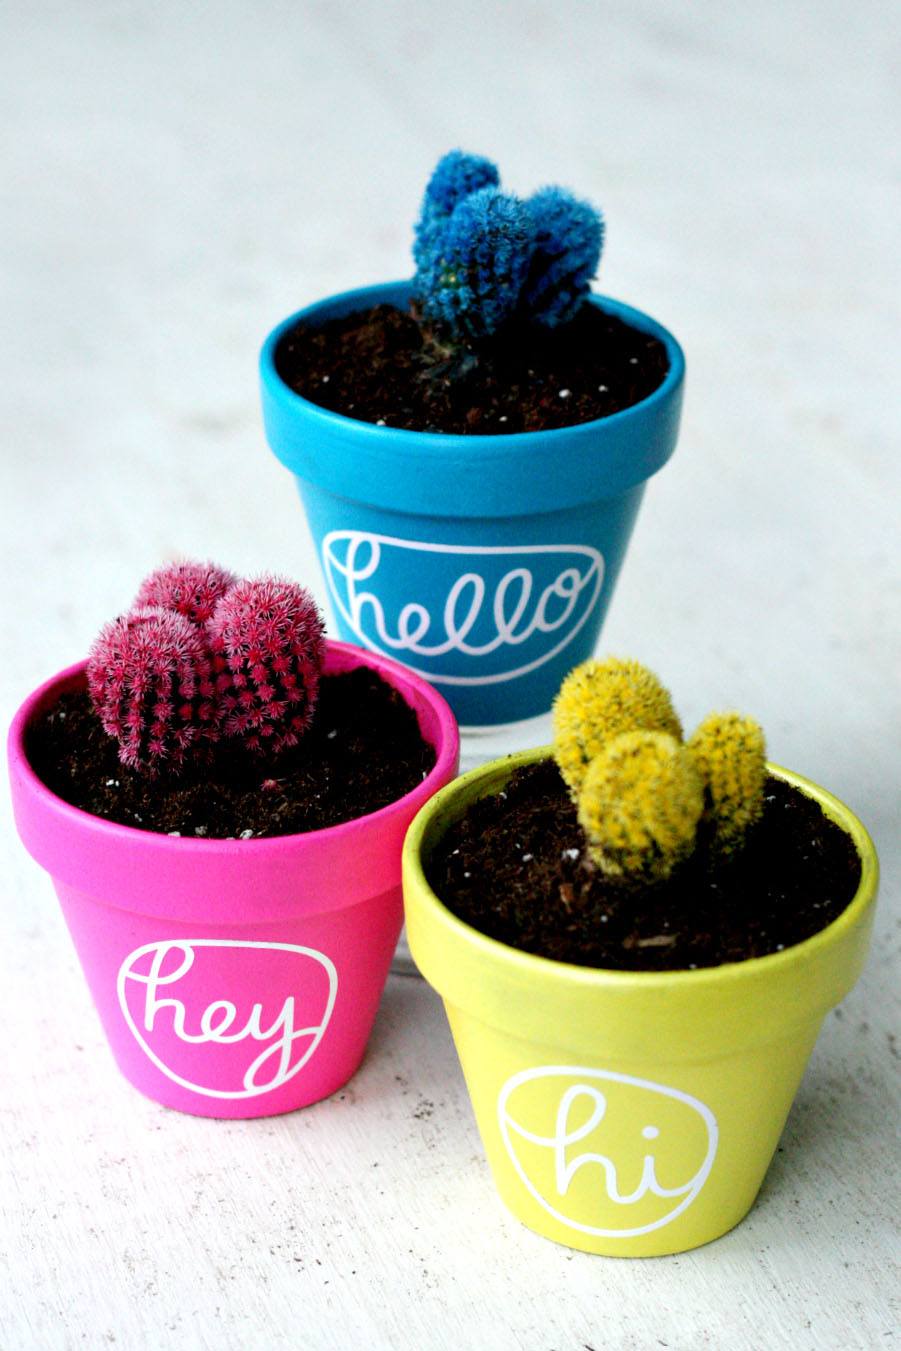 Colorful Hello Cactus Painted Pots